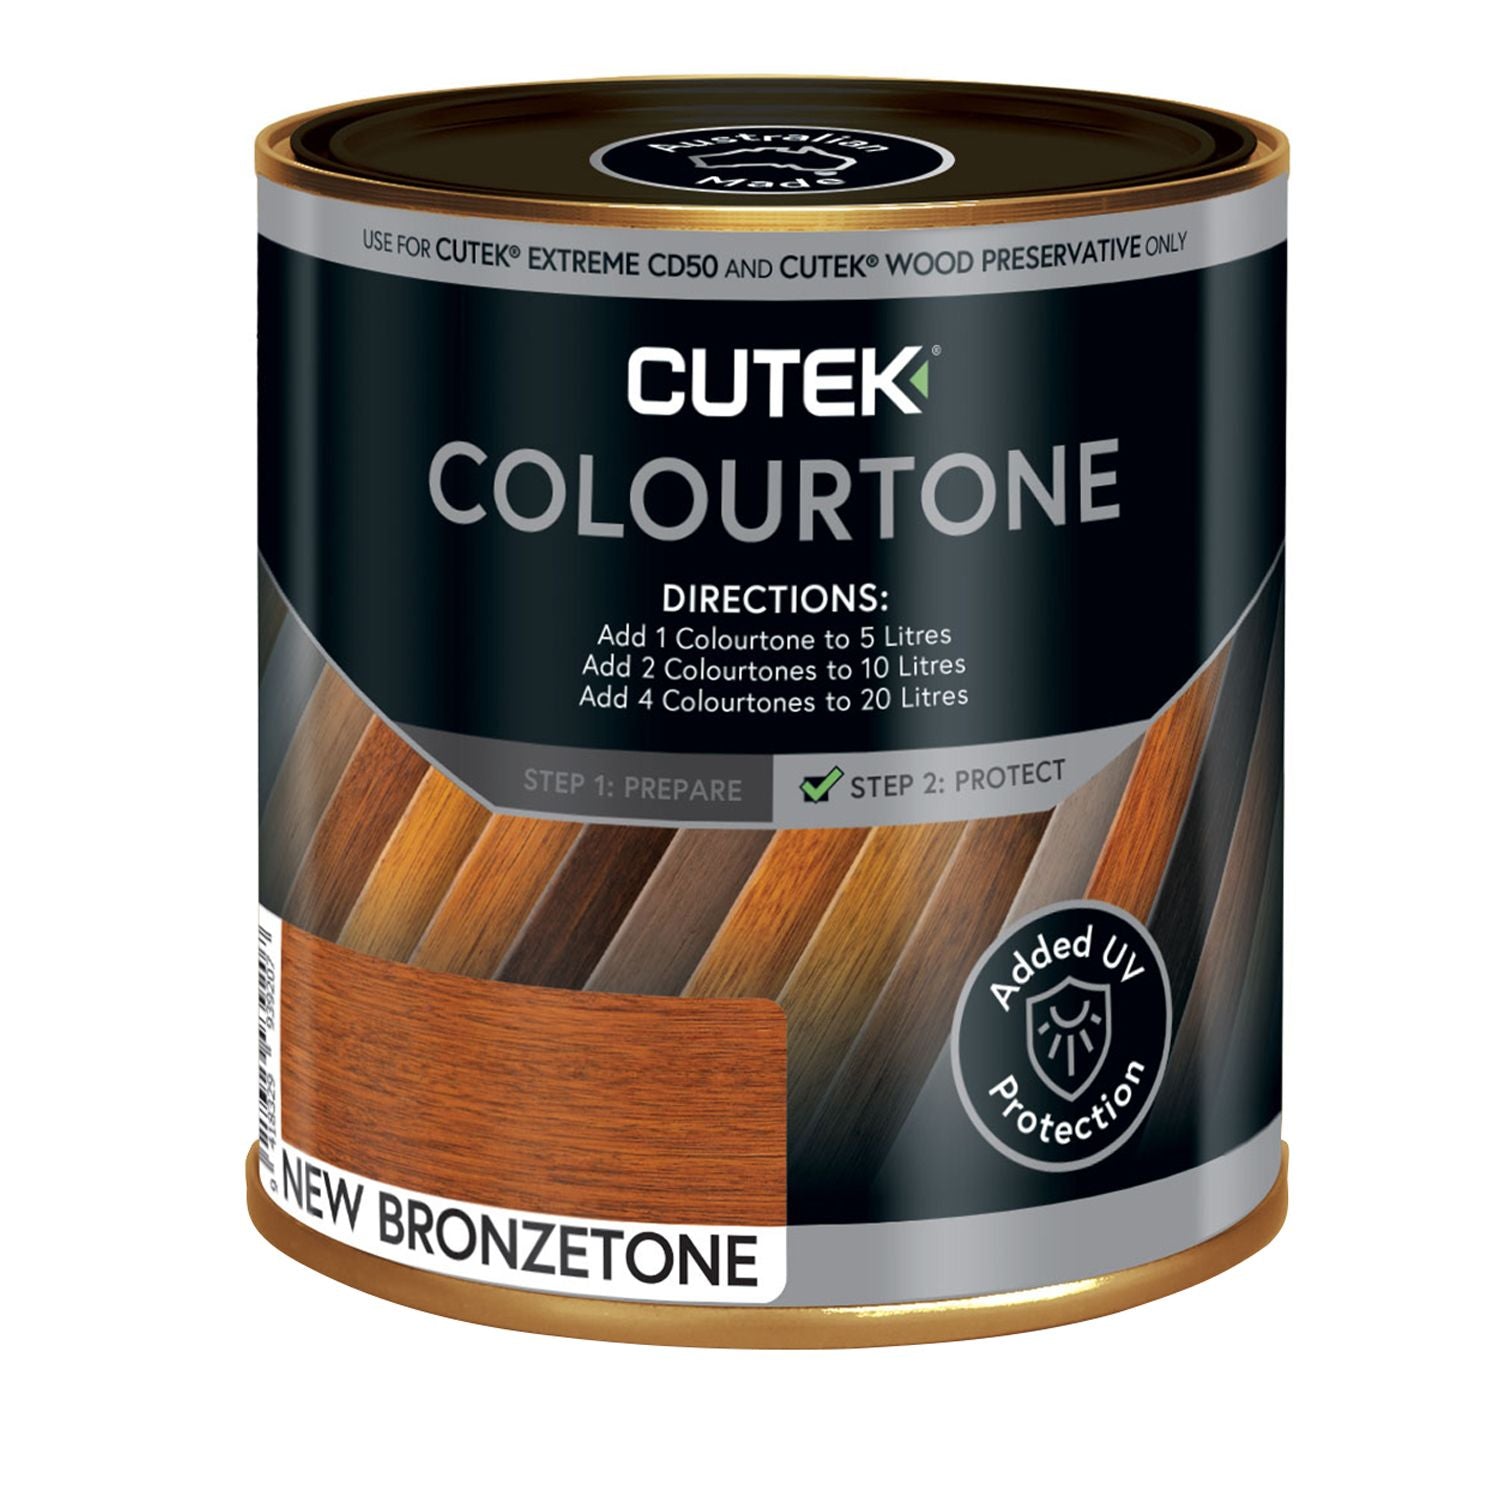 Cutek Colourtone 180ml - Surplus Traders Australia Buy Cutek Colourtone 180ml for only A$13.40 at Surplus Traders Australia!